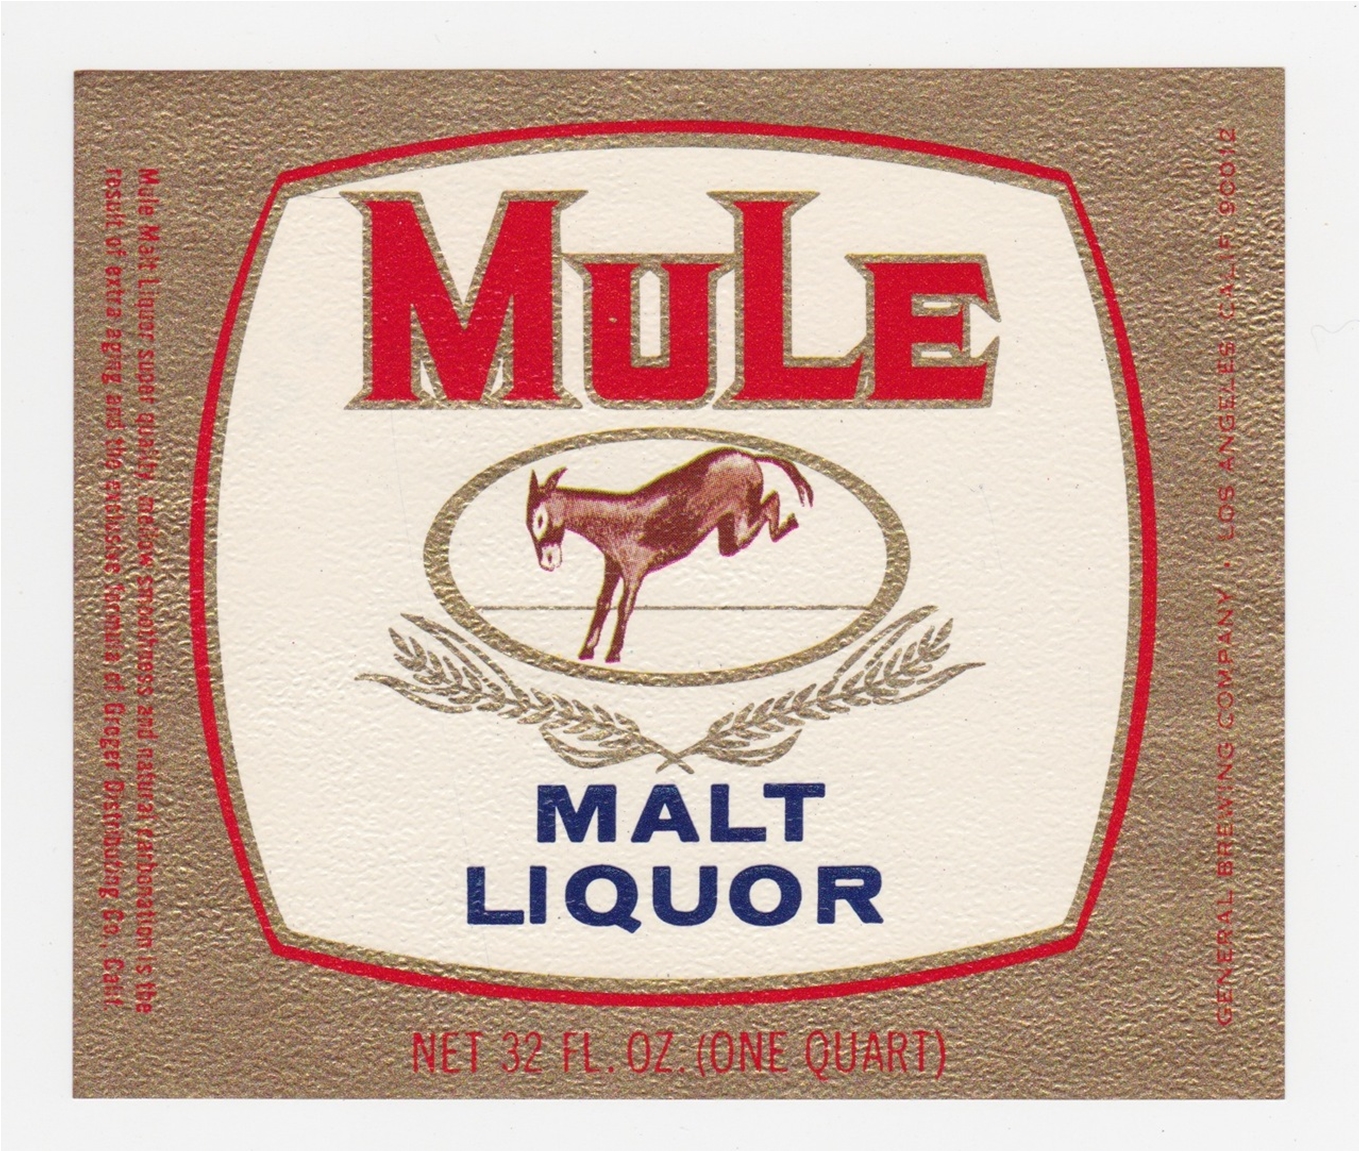 Mule Malt Liquor Beer Label